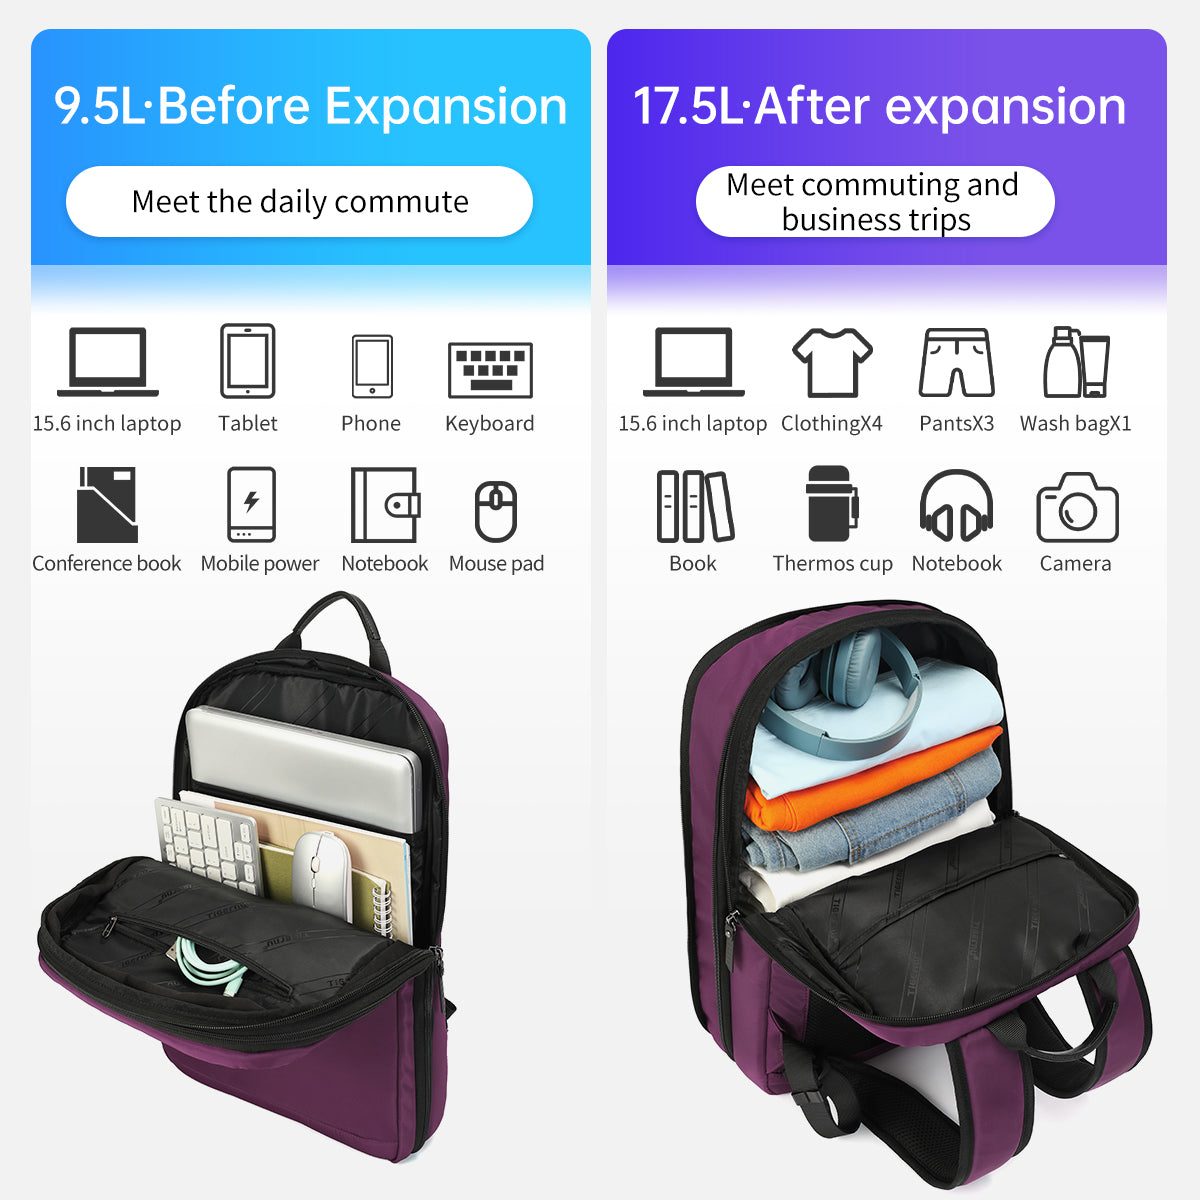 Tigernu TB-S slim backpack for women purple